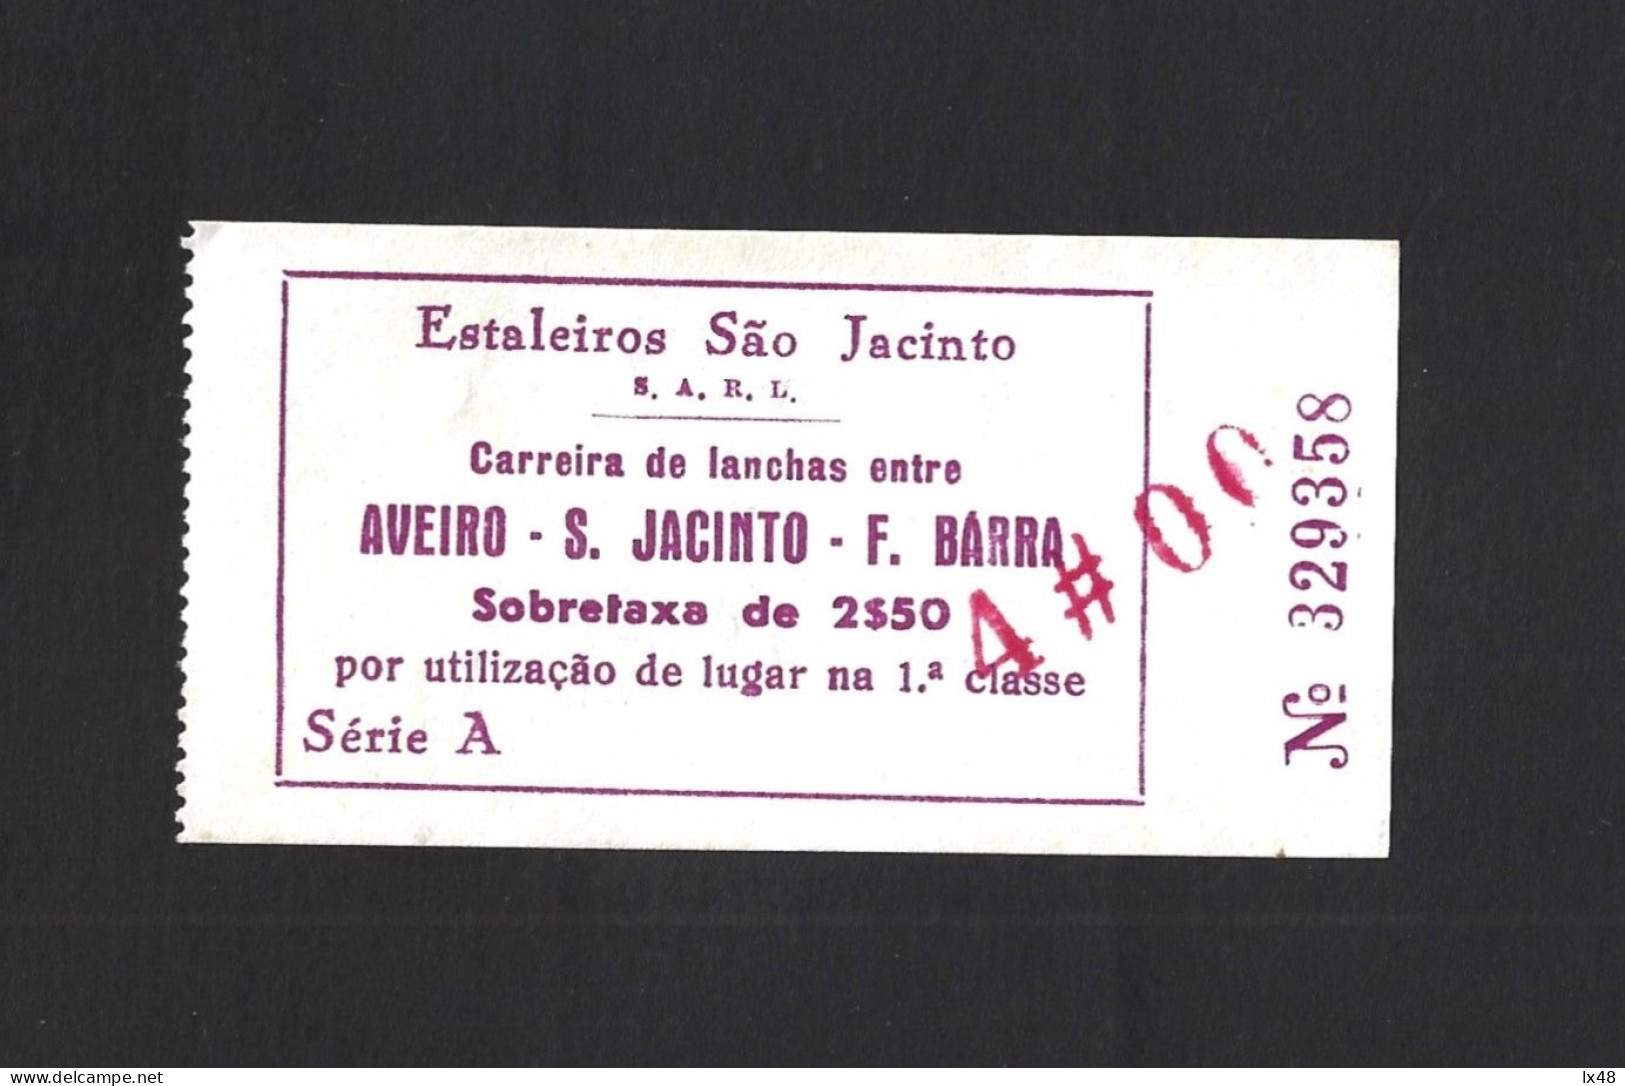 São Jacinto Shipyards, Aveiro. Ticket For Lance Race Between Aveiro, S. Jacinto And Forte Barra. Price Surcharge 4$00 Ra - Europe